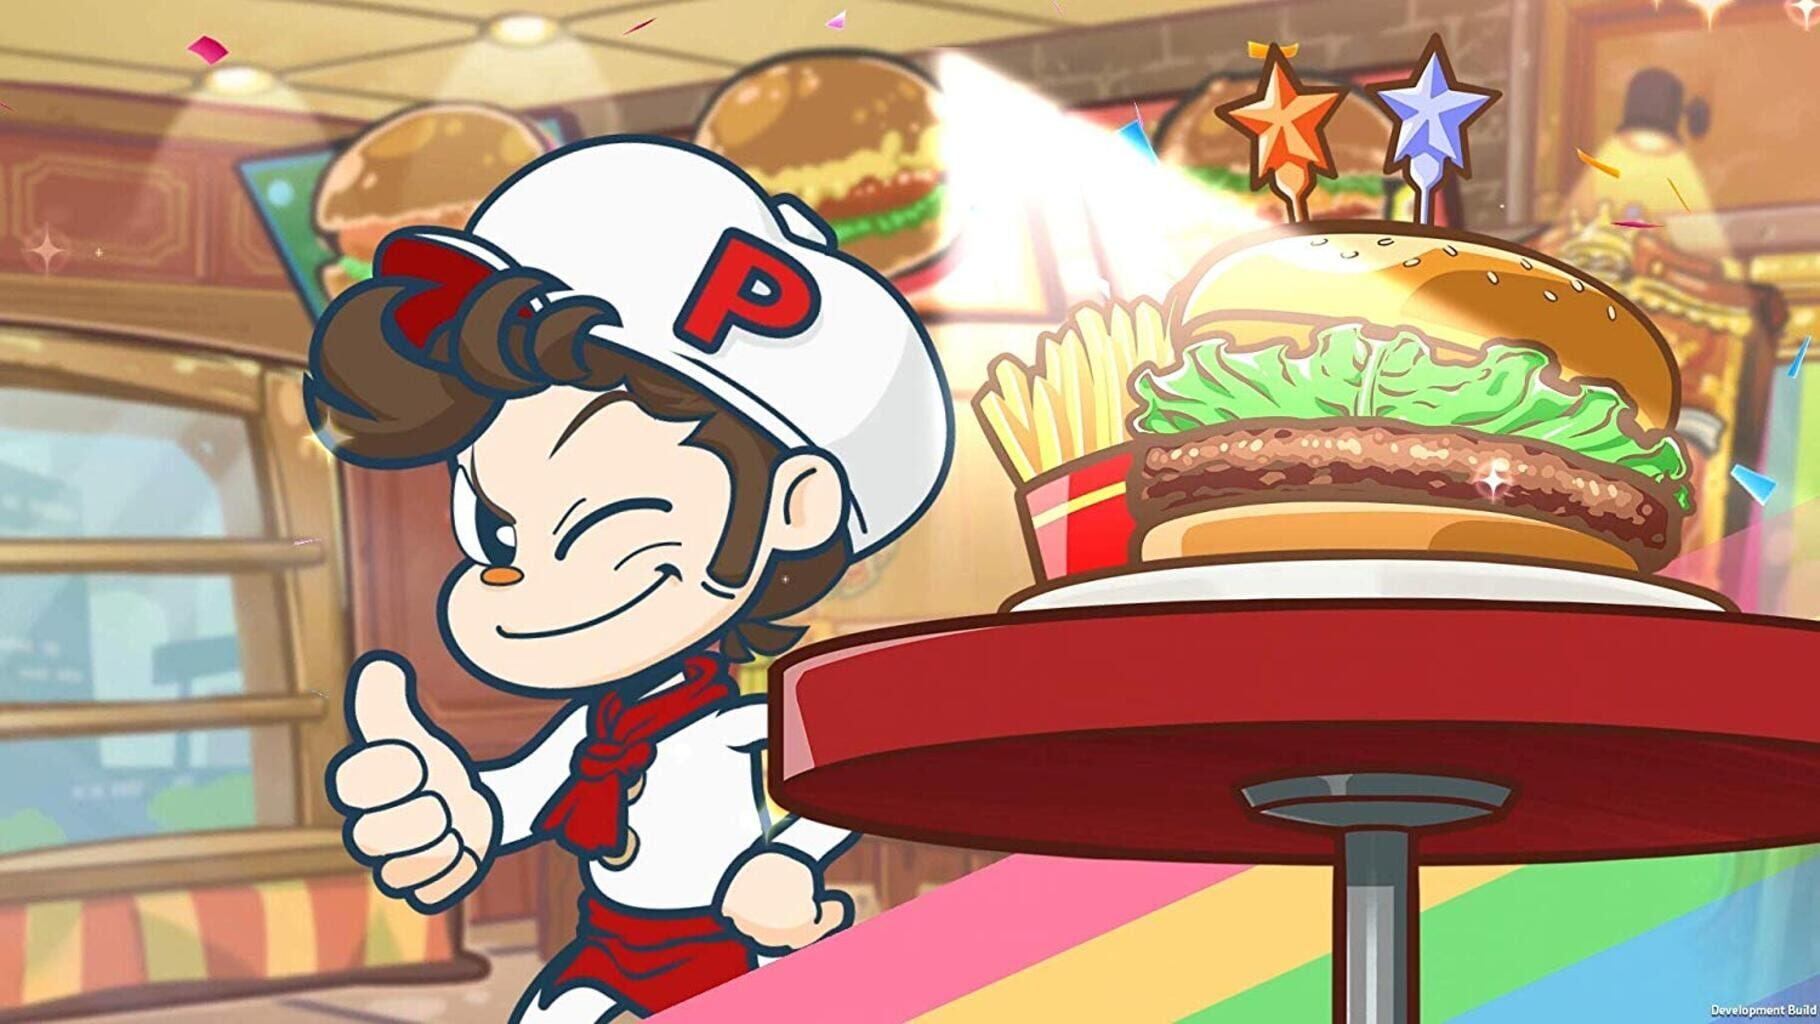 BurgerTime Party! artwork